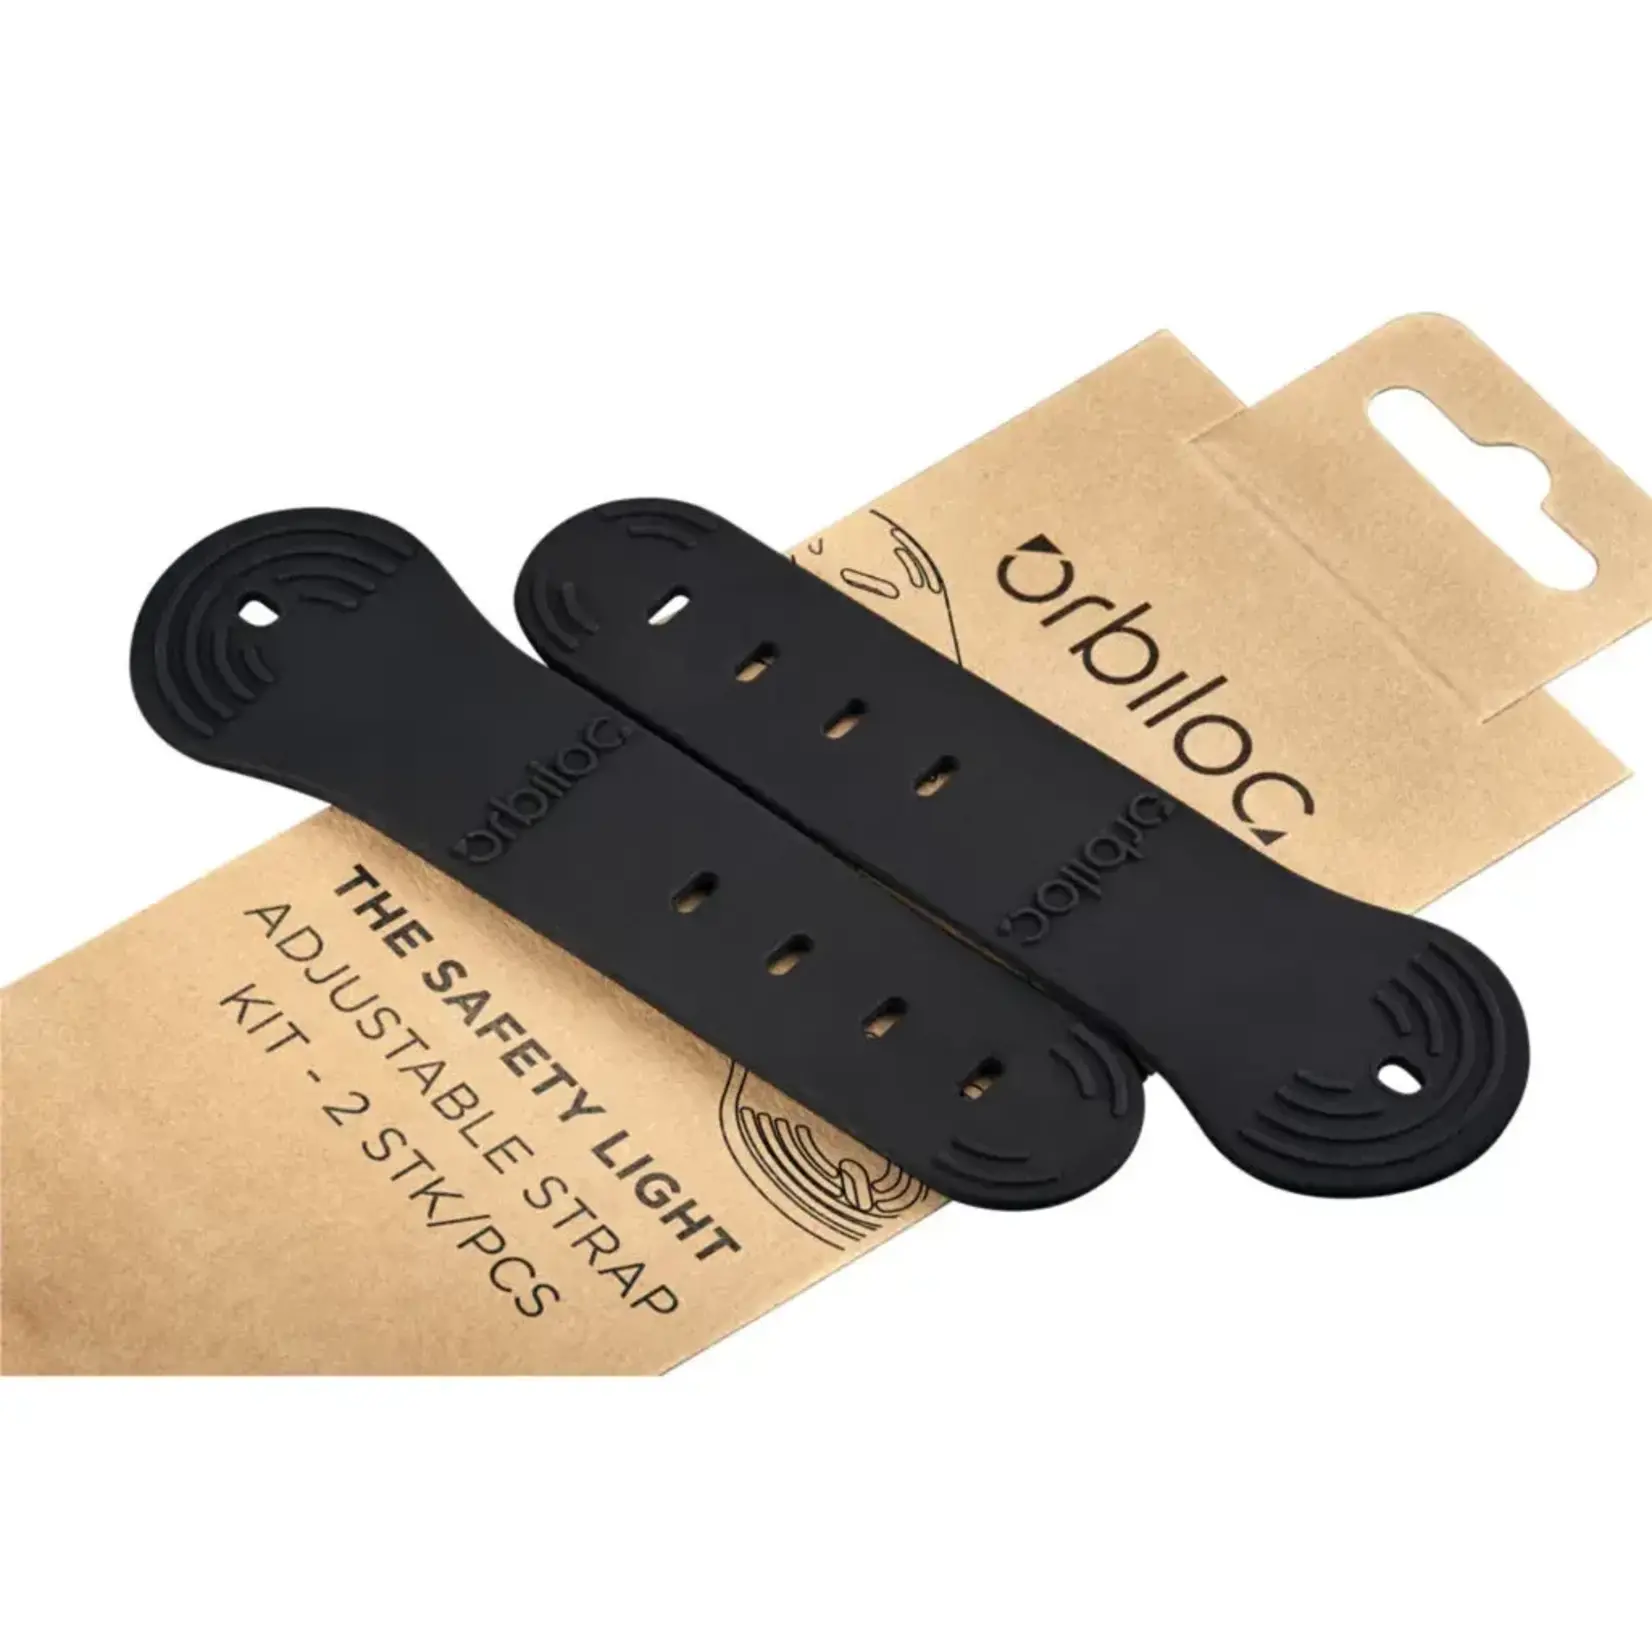 Orbiloc Orbiloc adjustable strap kit